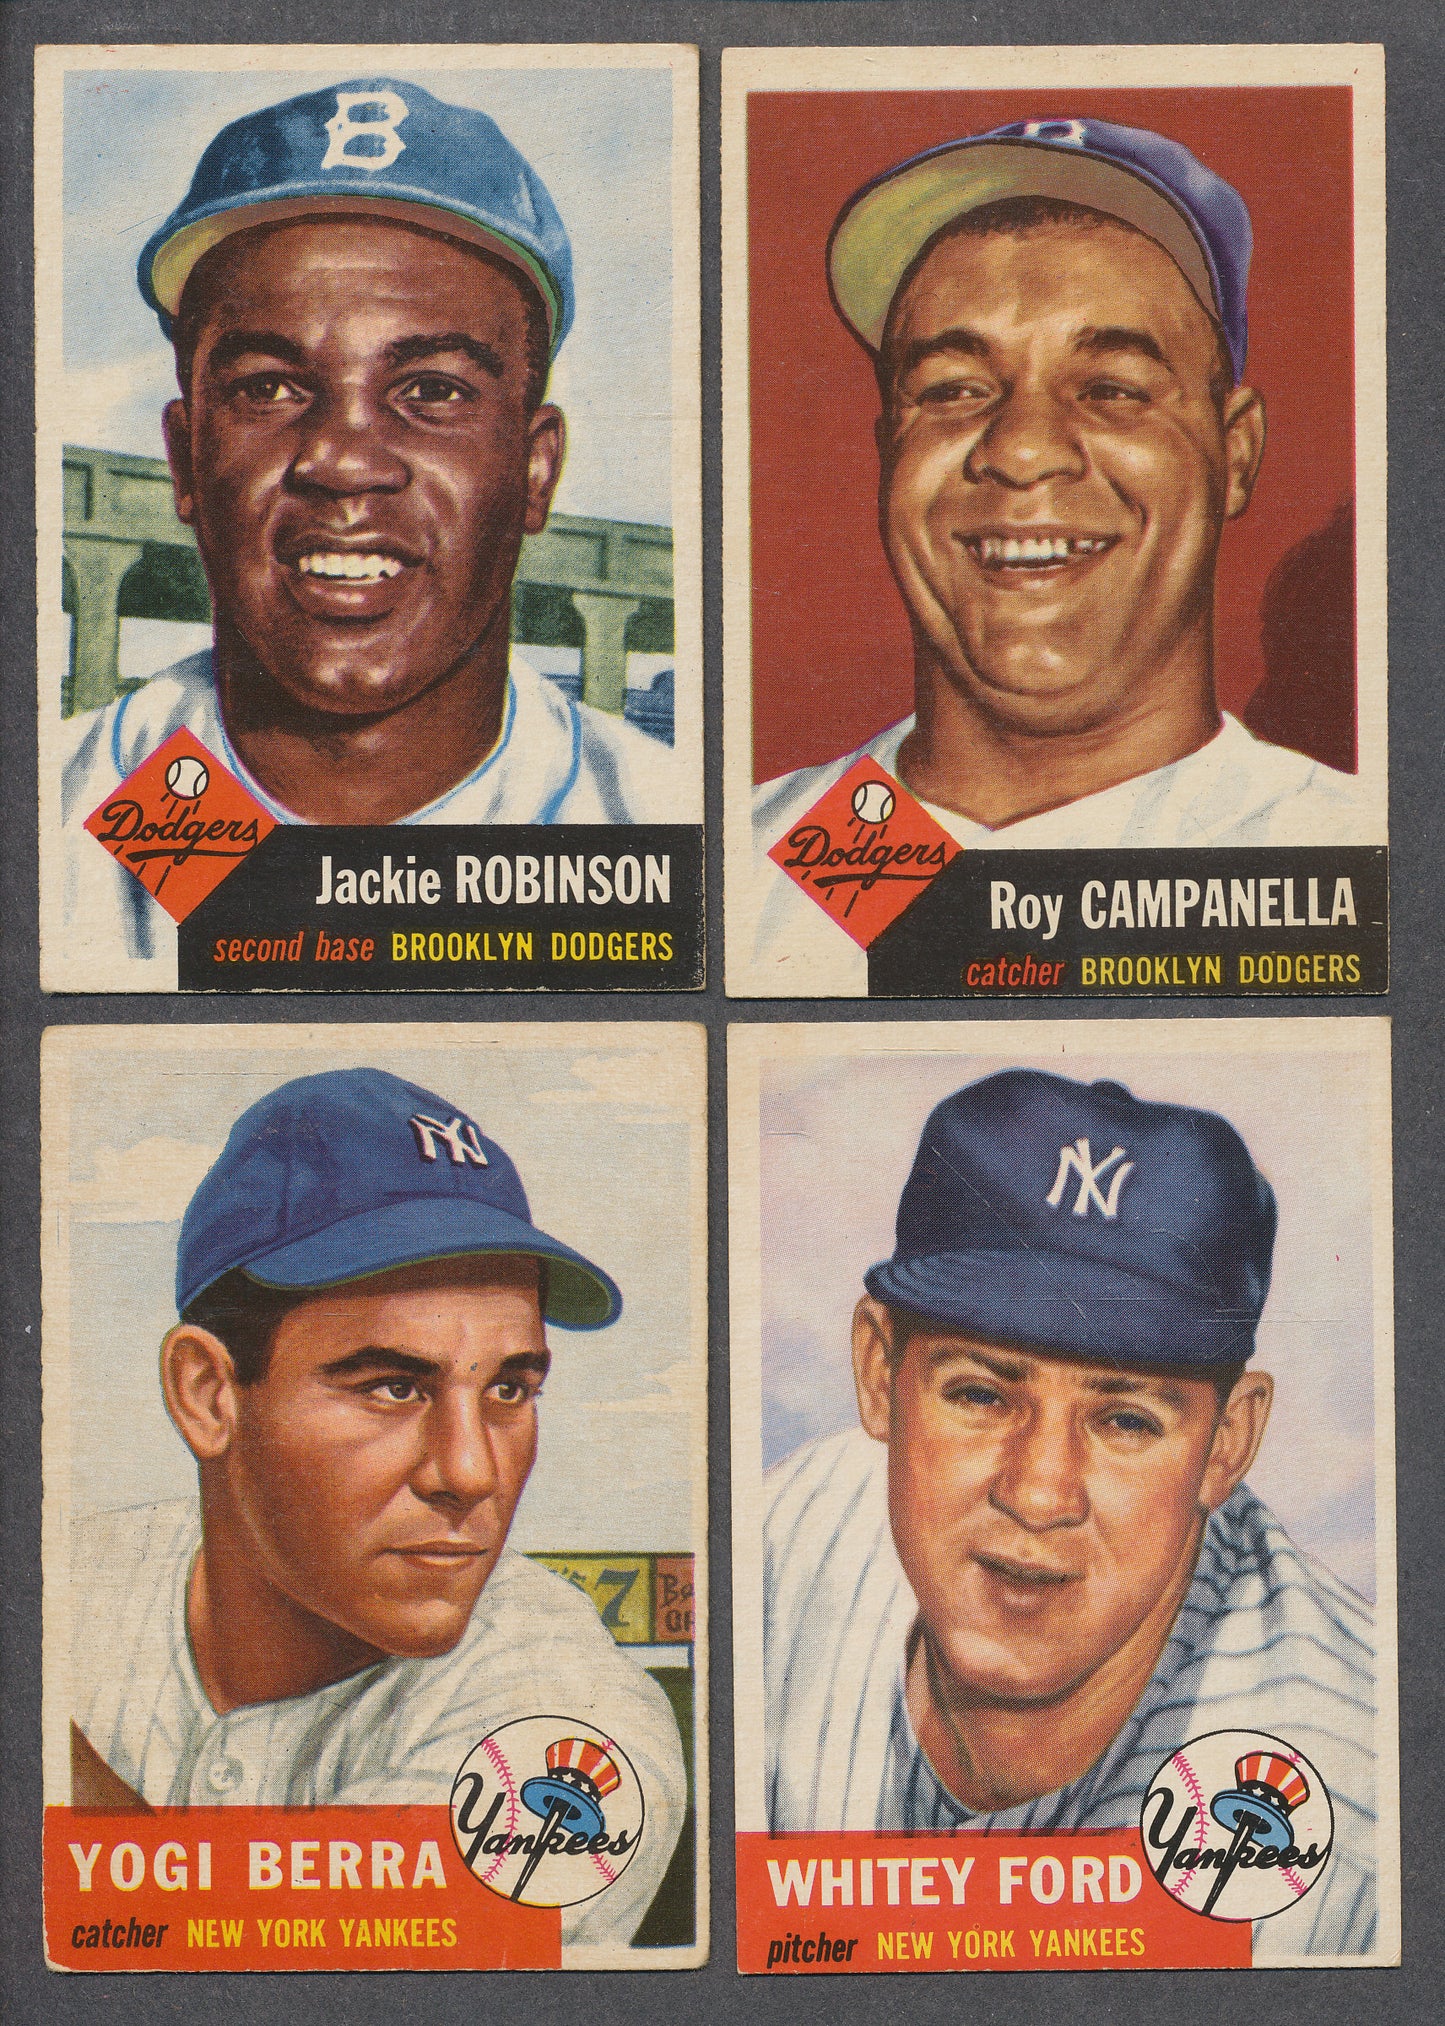 1953 Topps Baseball Partial Set VG